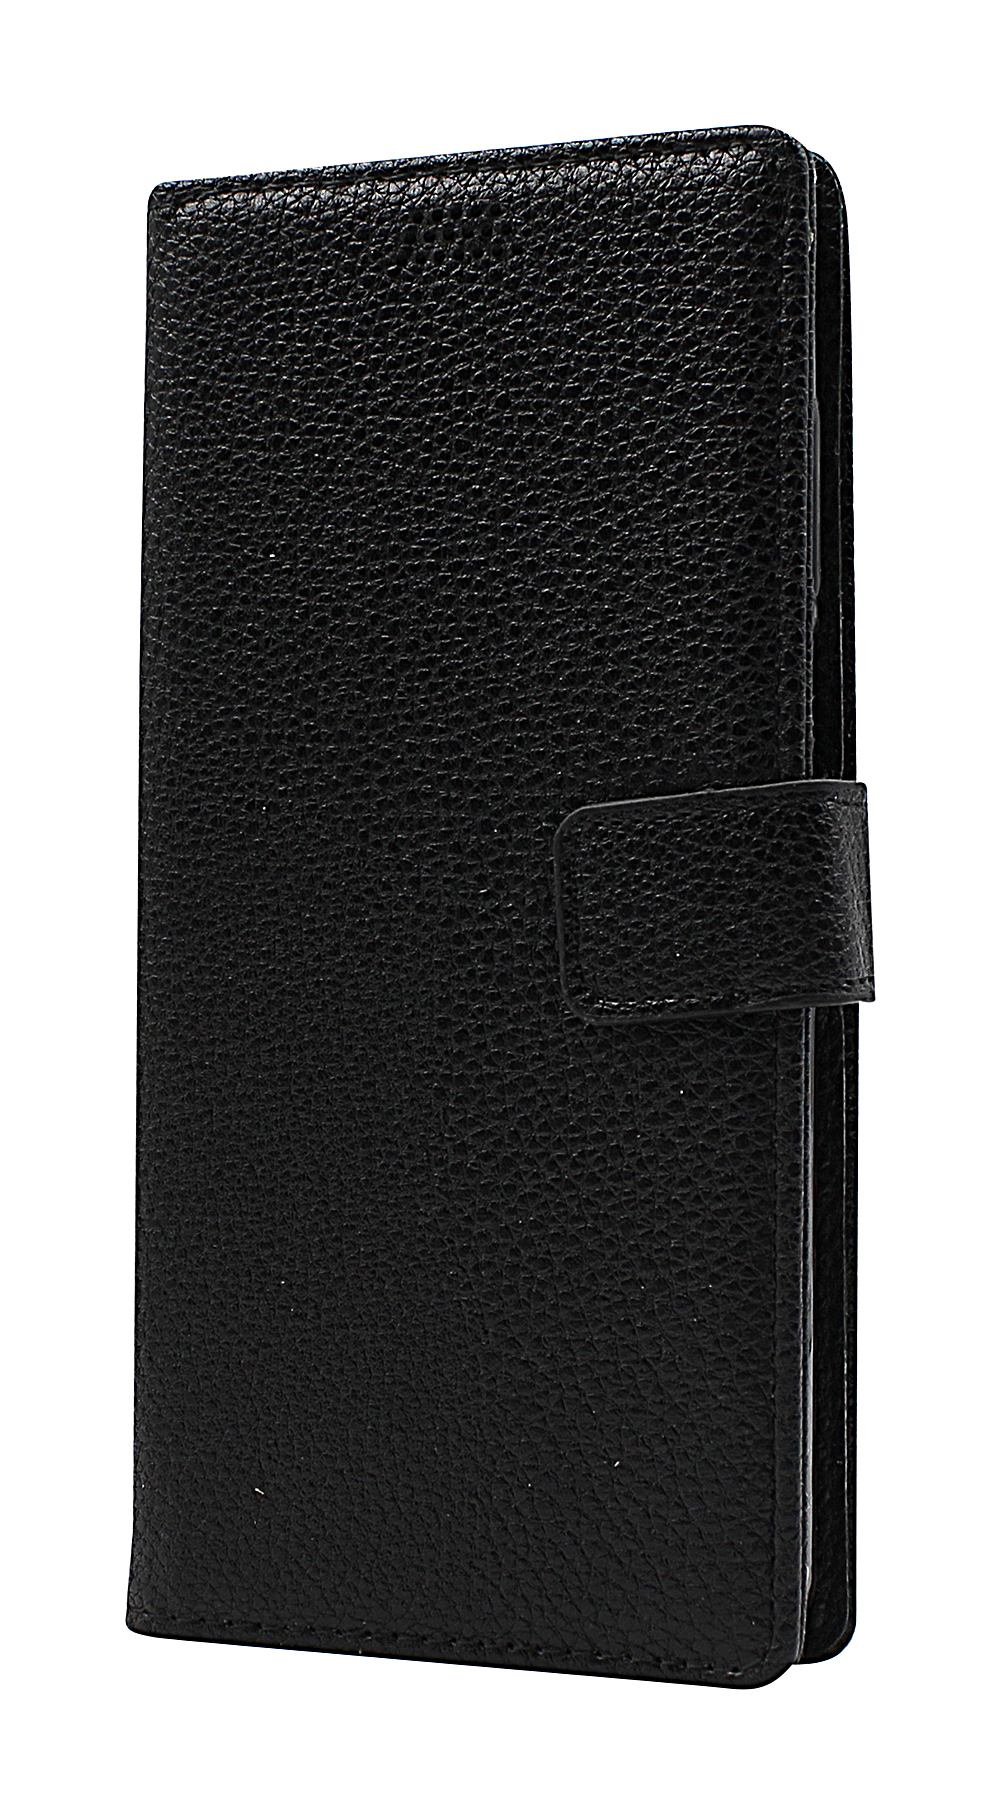 New Standcase Wallet Motorola Edge 20 Lite